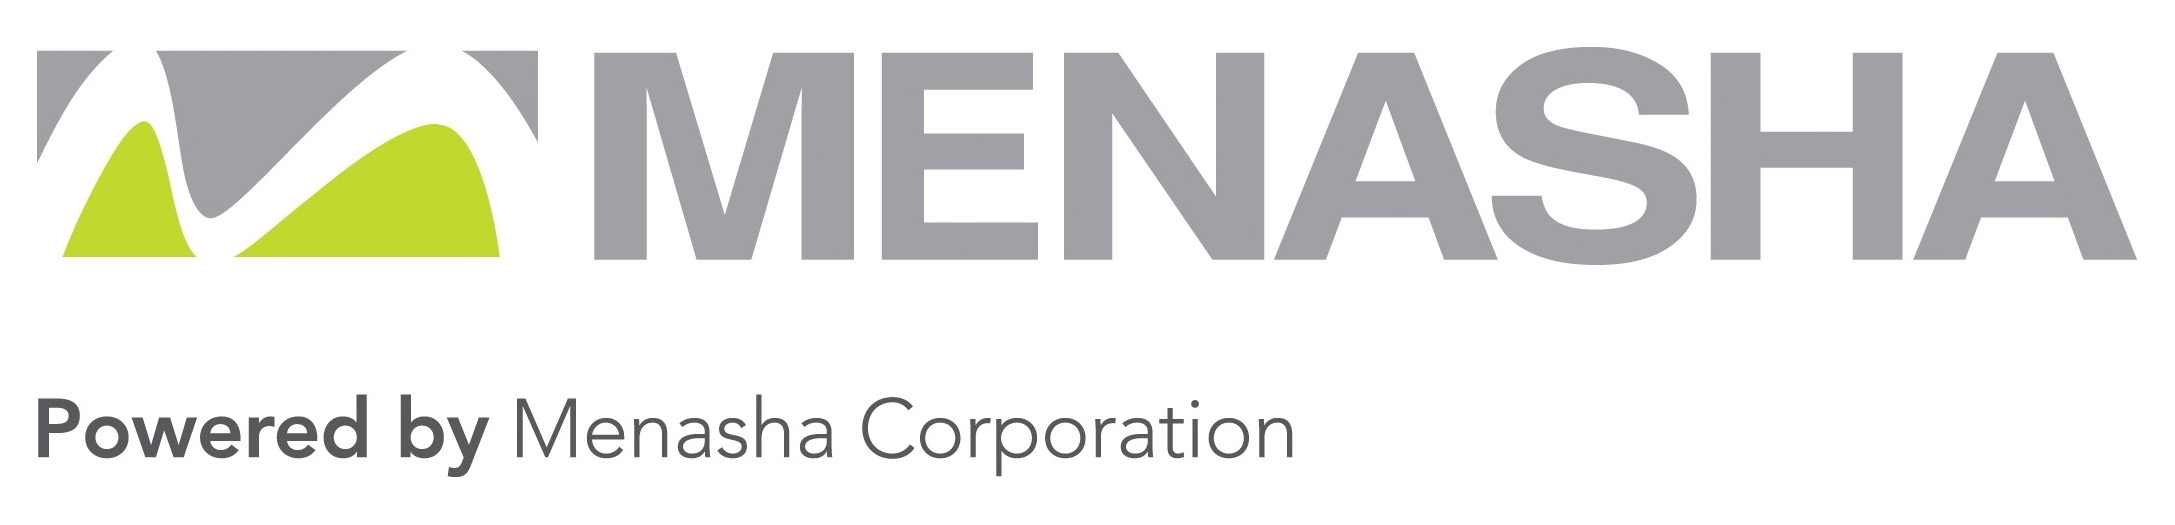 Menasha Packaging Company Logo